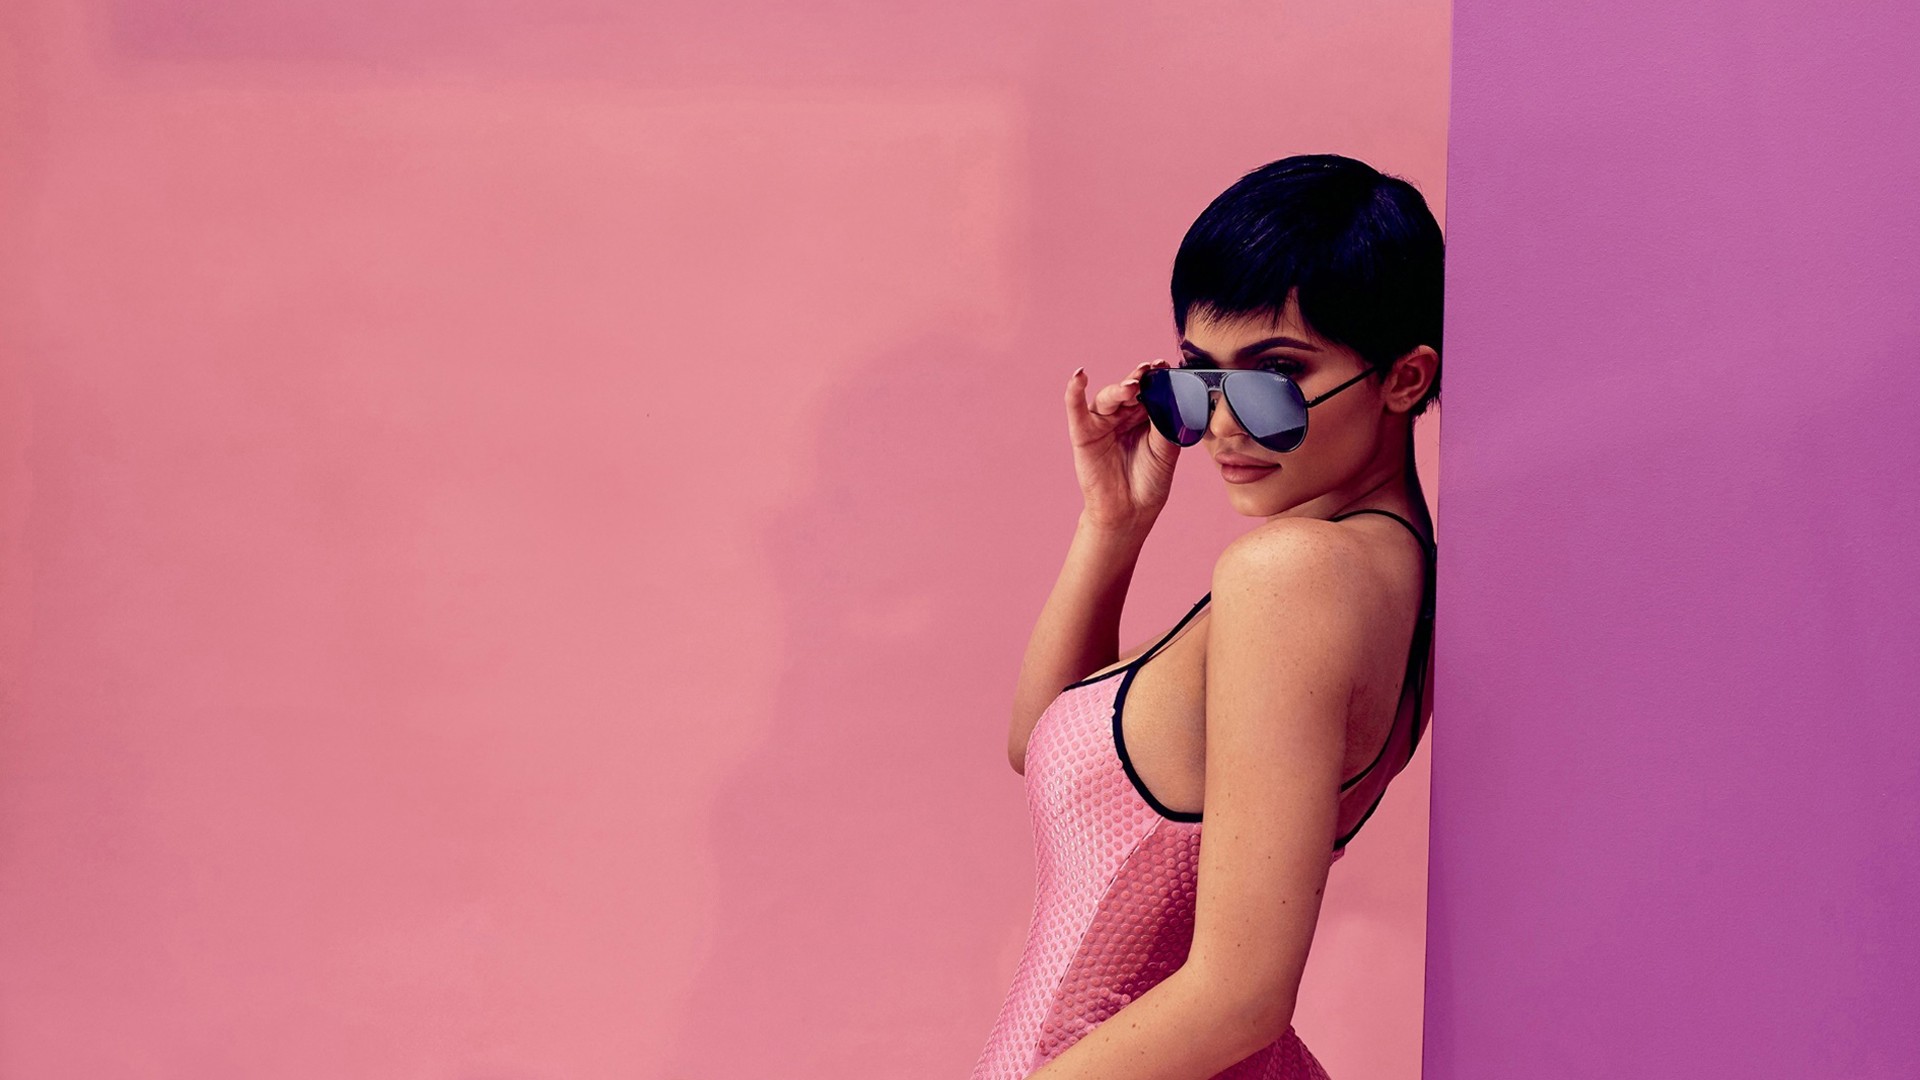 Black Hair Kylie Jenner Model Short Hair Sunglasses Woman 1920x1080